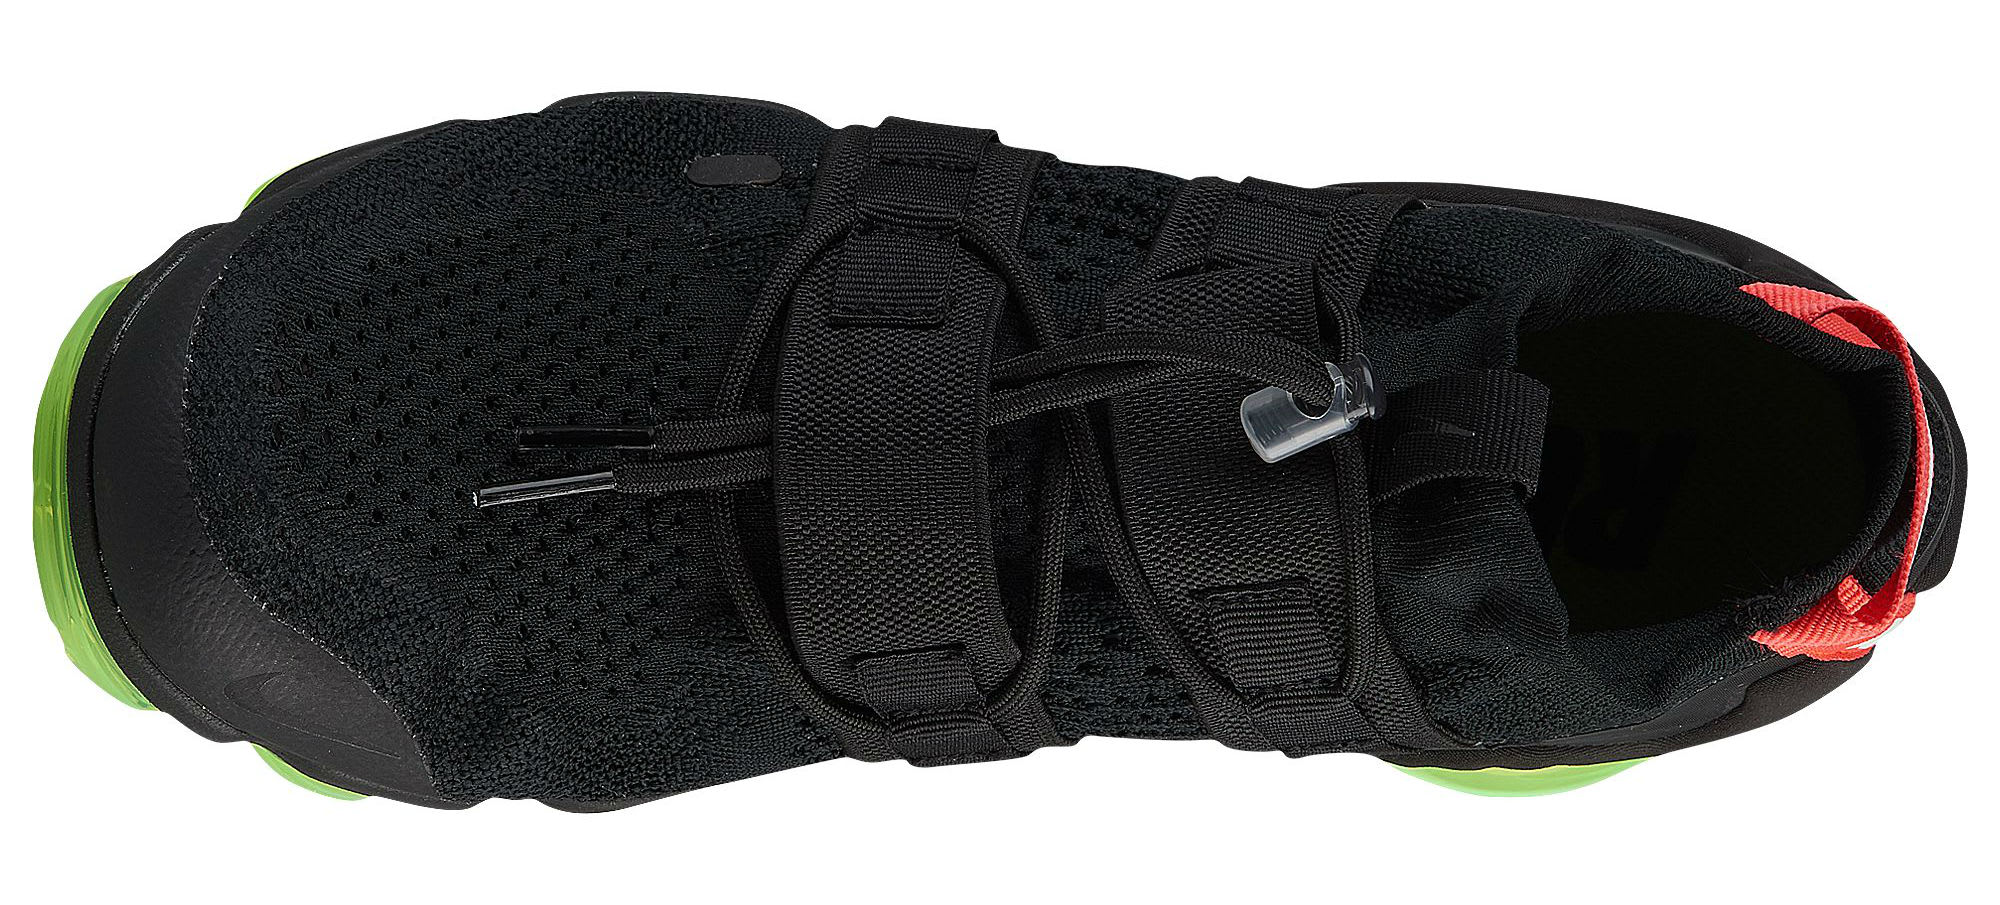 Nike Air VaporMax Flyknit Utility Yeezy Black Volt Crimson Release Date AH6834-007 Top